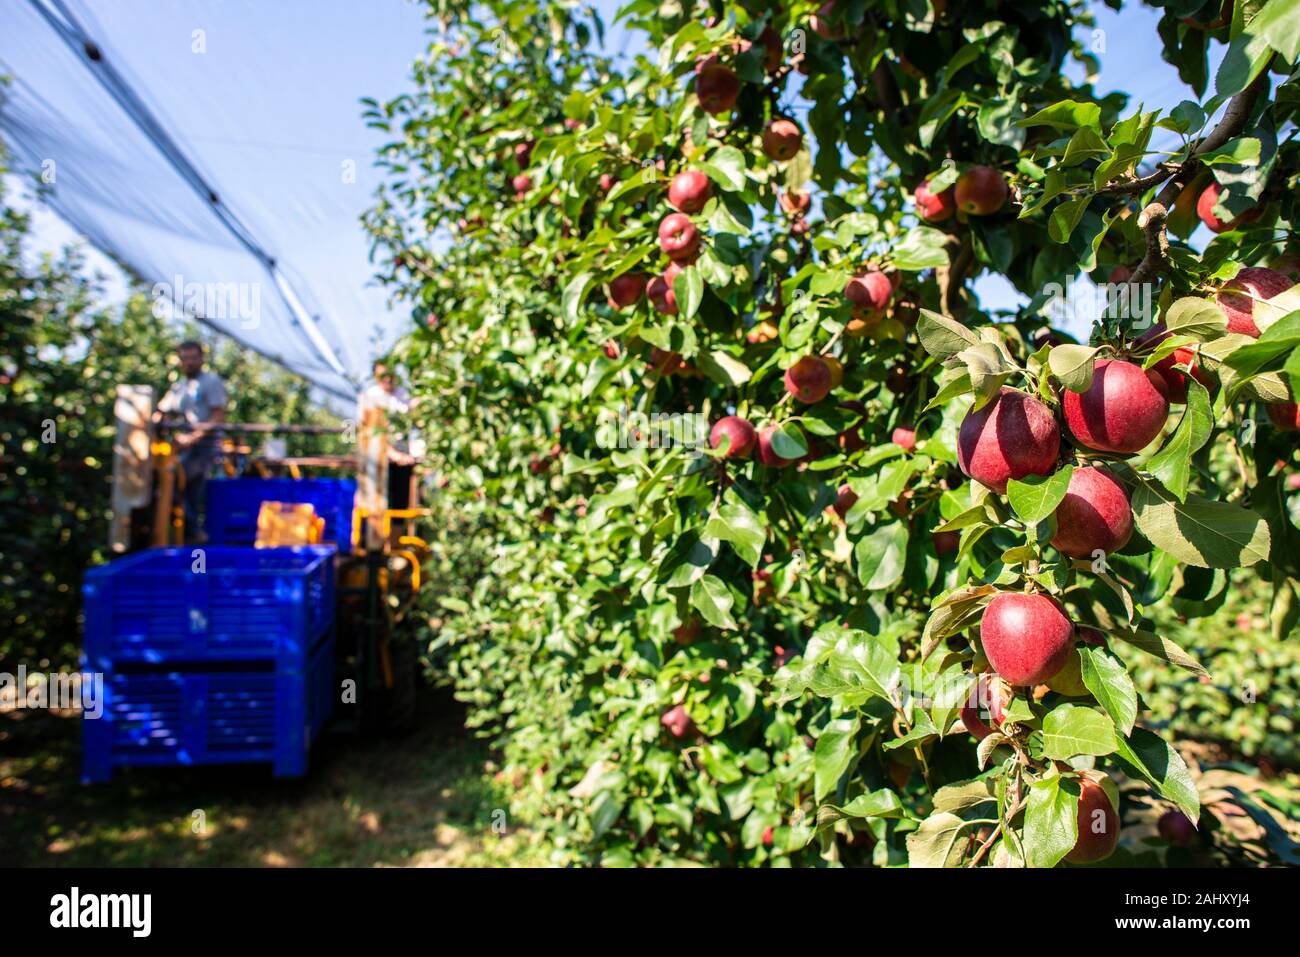 Maquina cosechadora de manzanas fotografías e imágenes de alta resolución -  Alamy